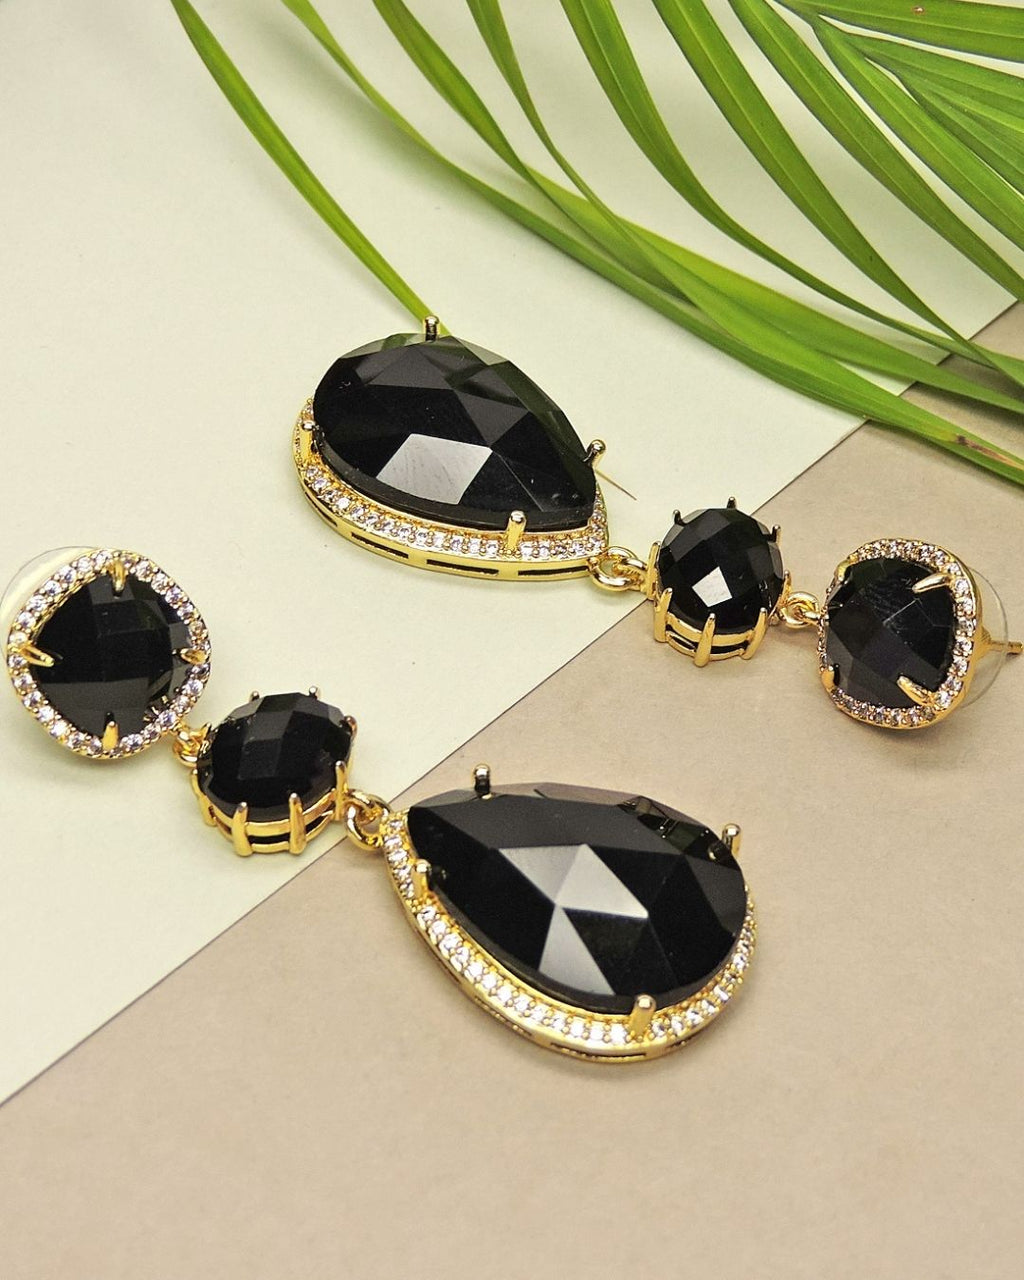 Amora Earrings - Earrings - Handcrafted Jewellery - Made in India - Dubai Jewellery, Fashion & Lifestyle - Dori